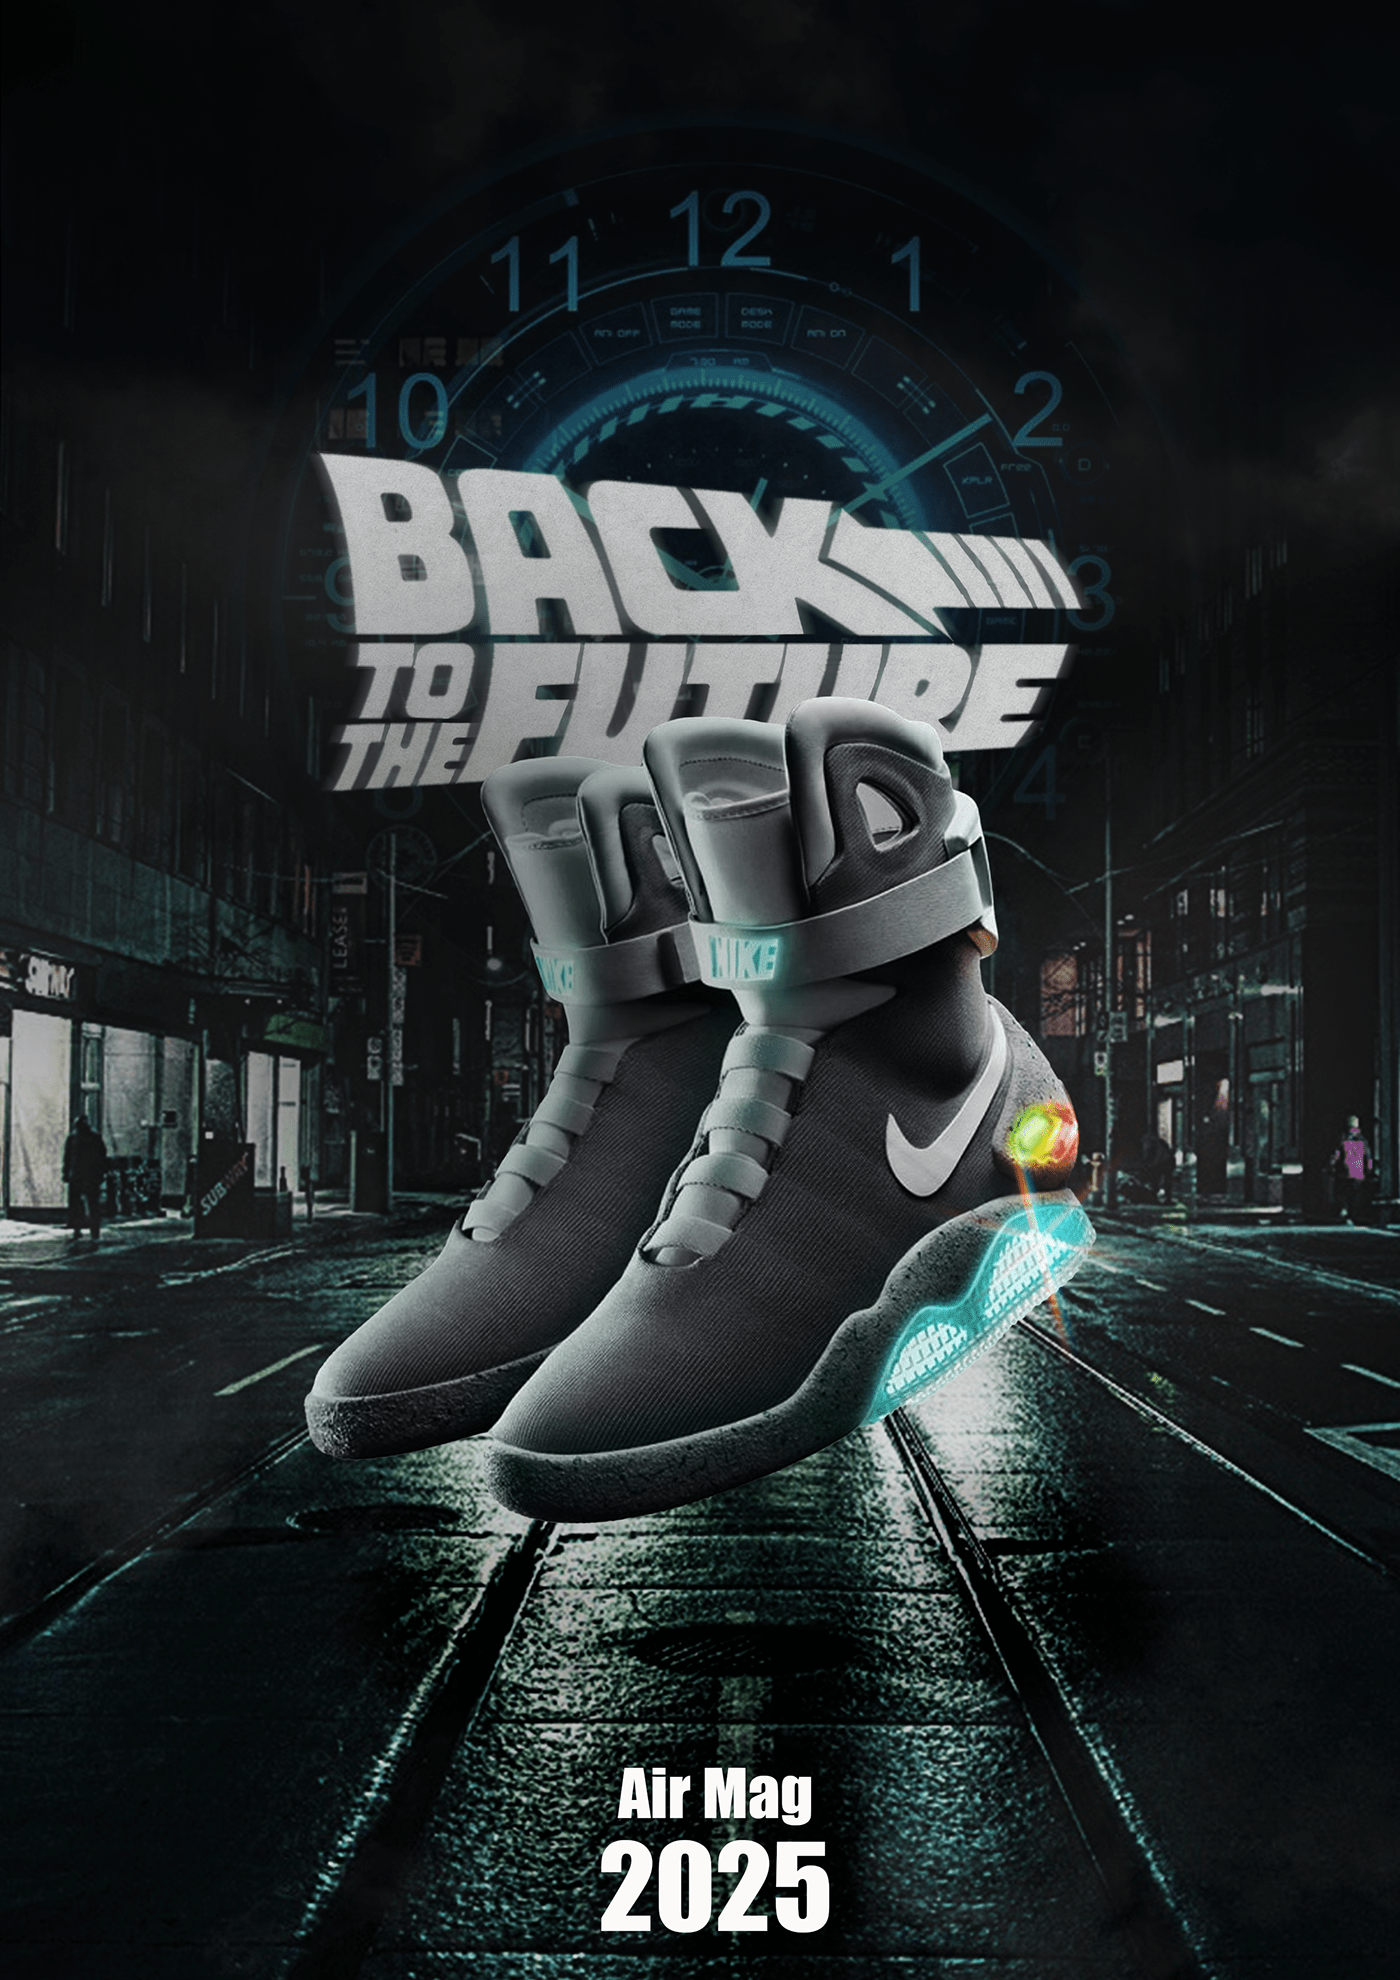 Nike Nike Shoes propaganda poster poster design Poster Design Fan Art artwork backtothefuture